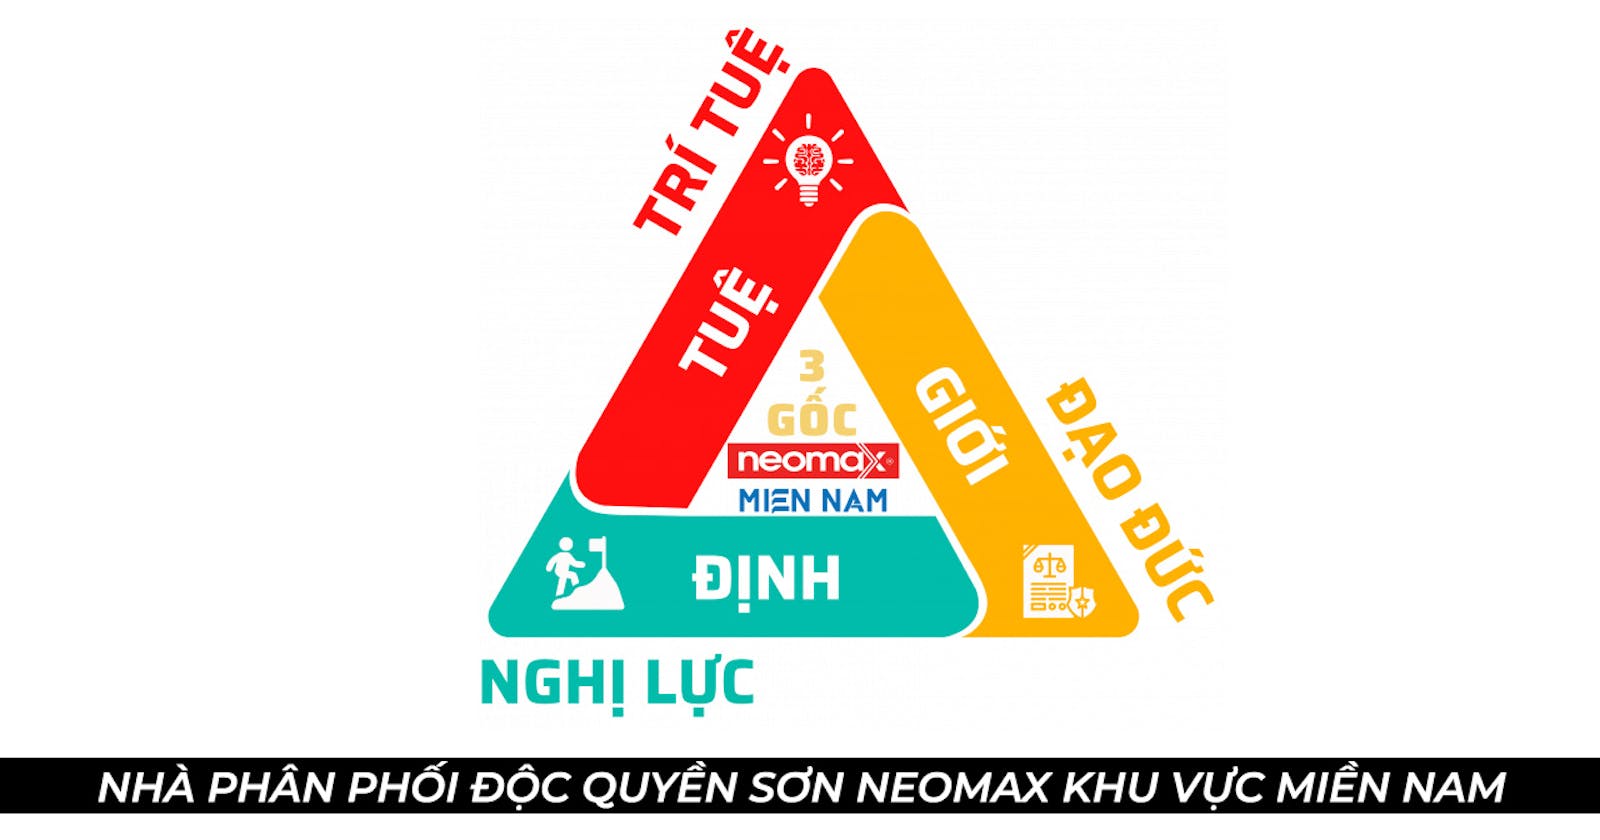 3 gốc doanh nghiệp của Neomax Miền Nam